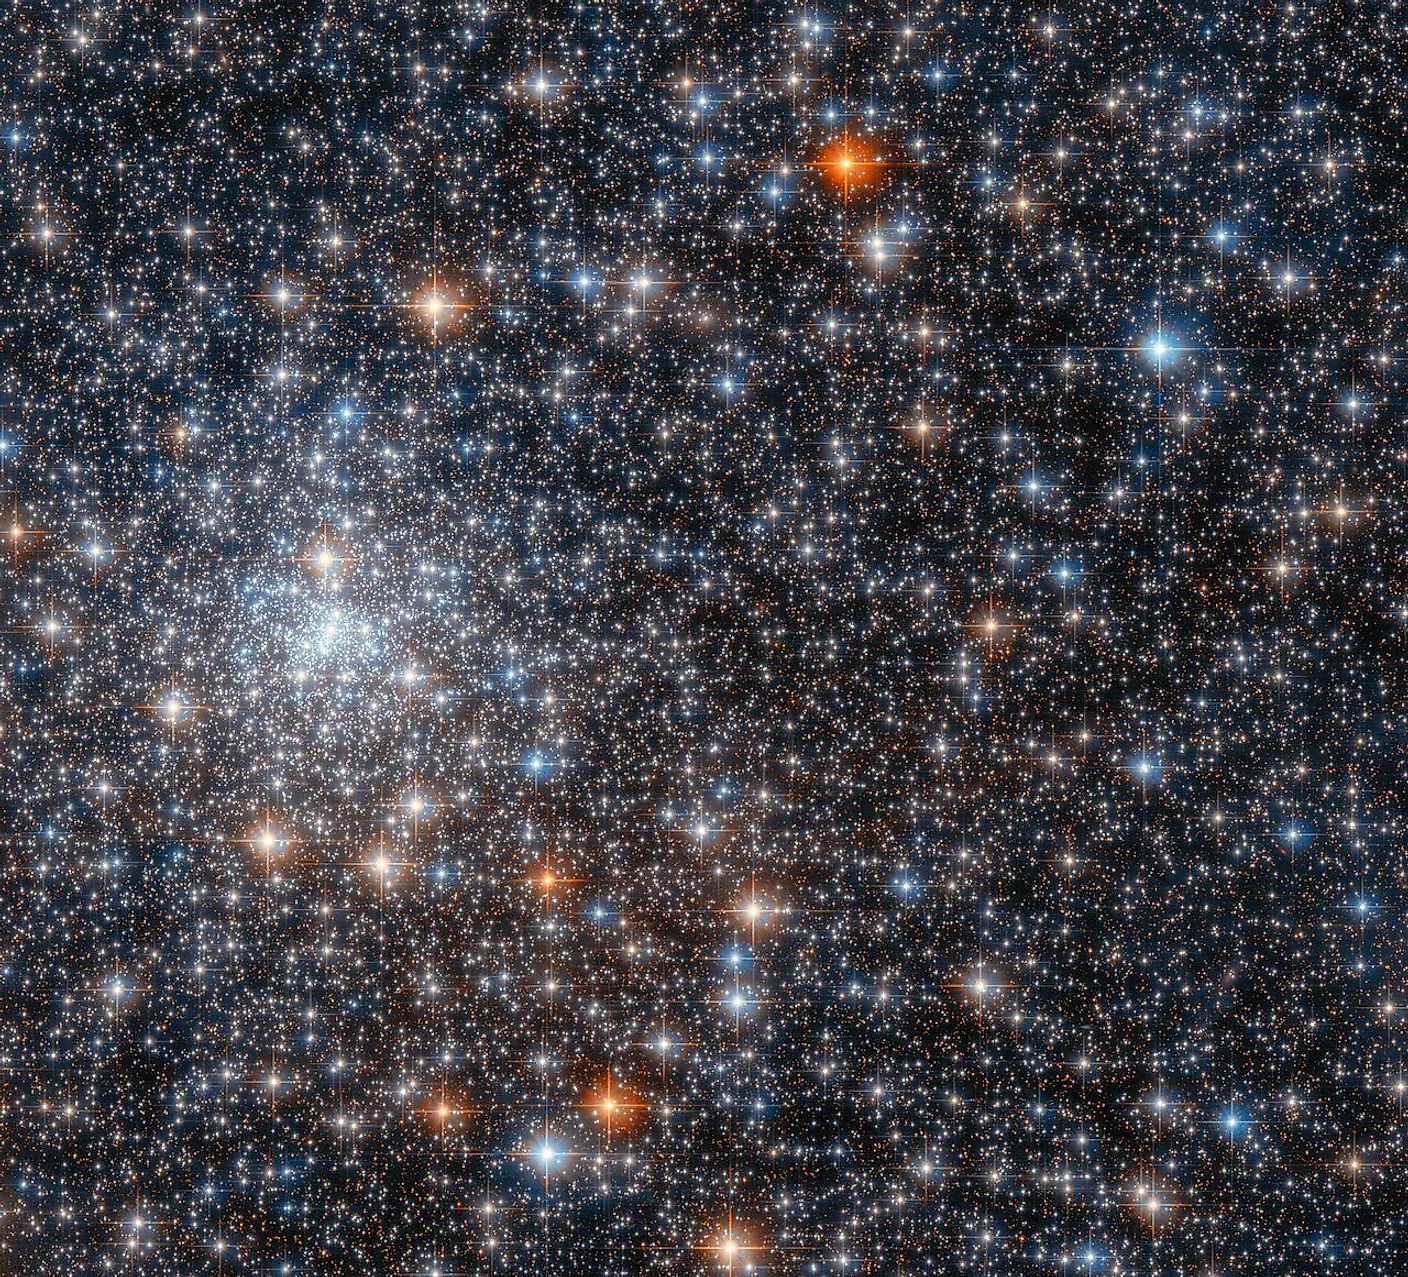 Hubble image of a star cluster. Image credit: NASA/ESA